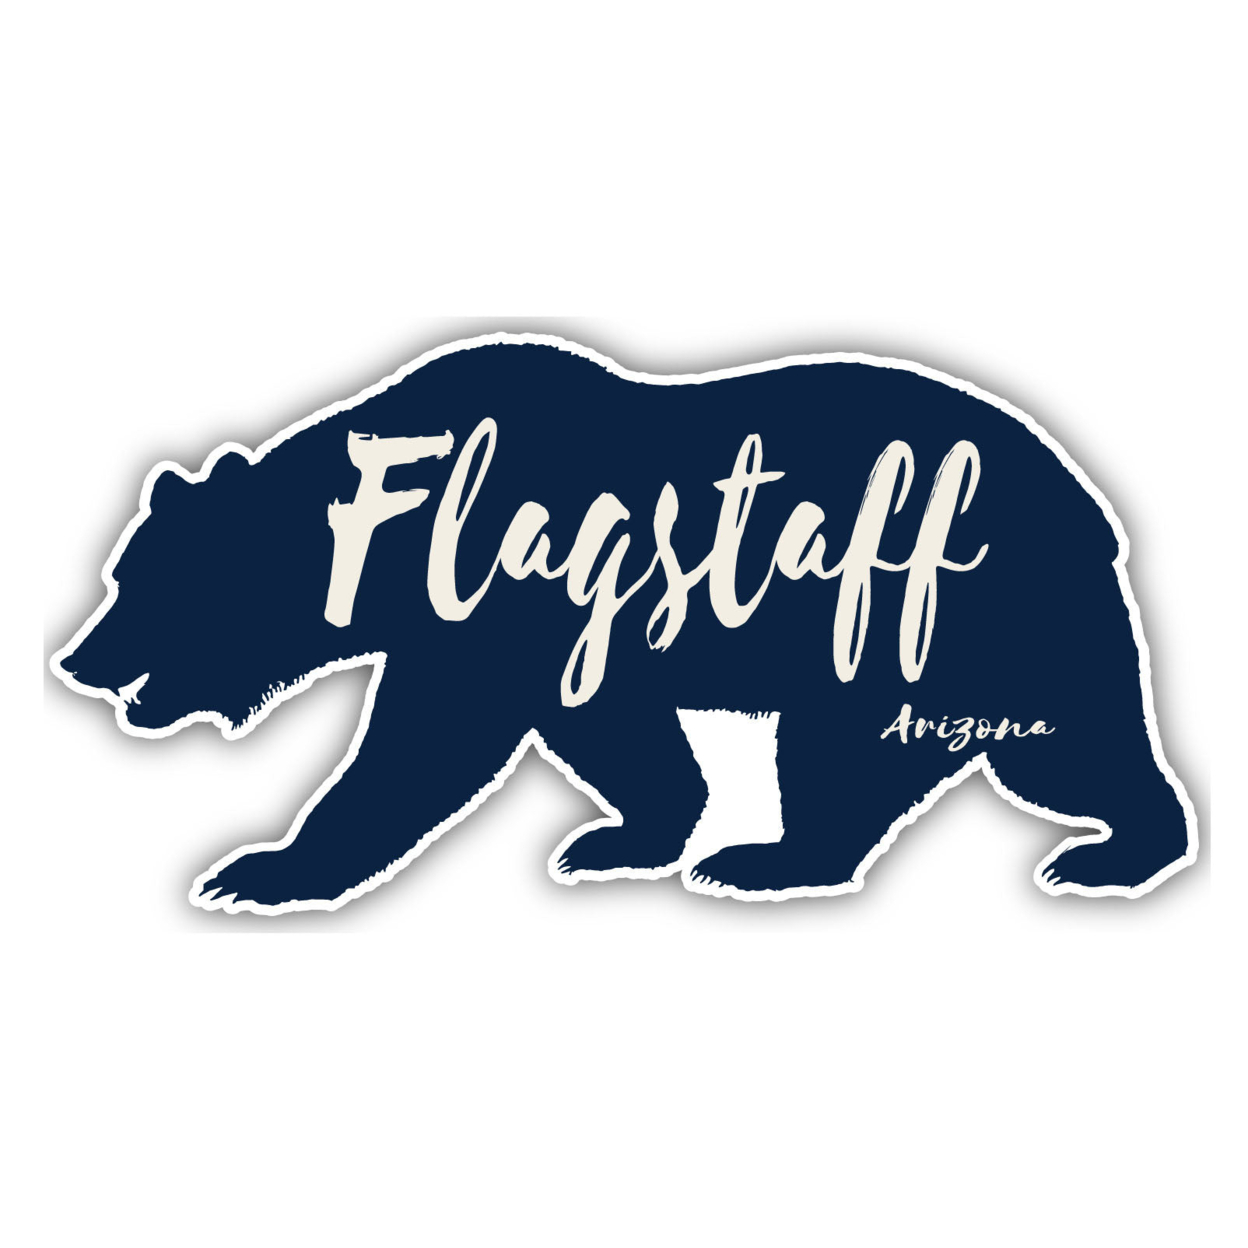 Flagstaff Arizona Souvenir Decorative Stickers (Choose Theme And Size) - Single Unit, 8-Inch, Camp Life